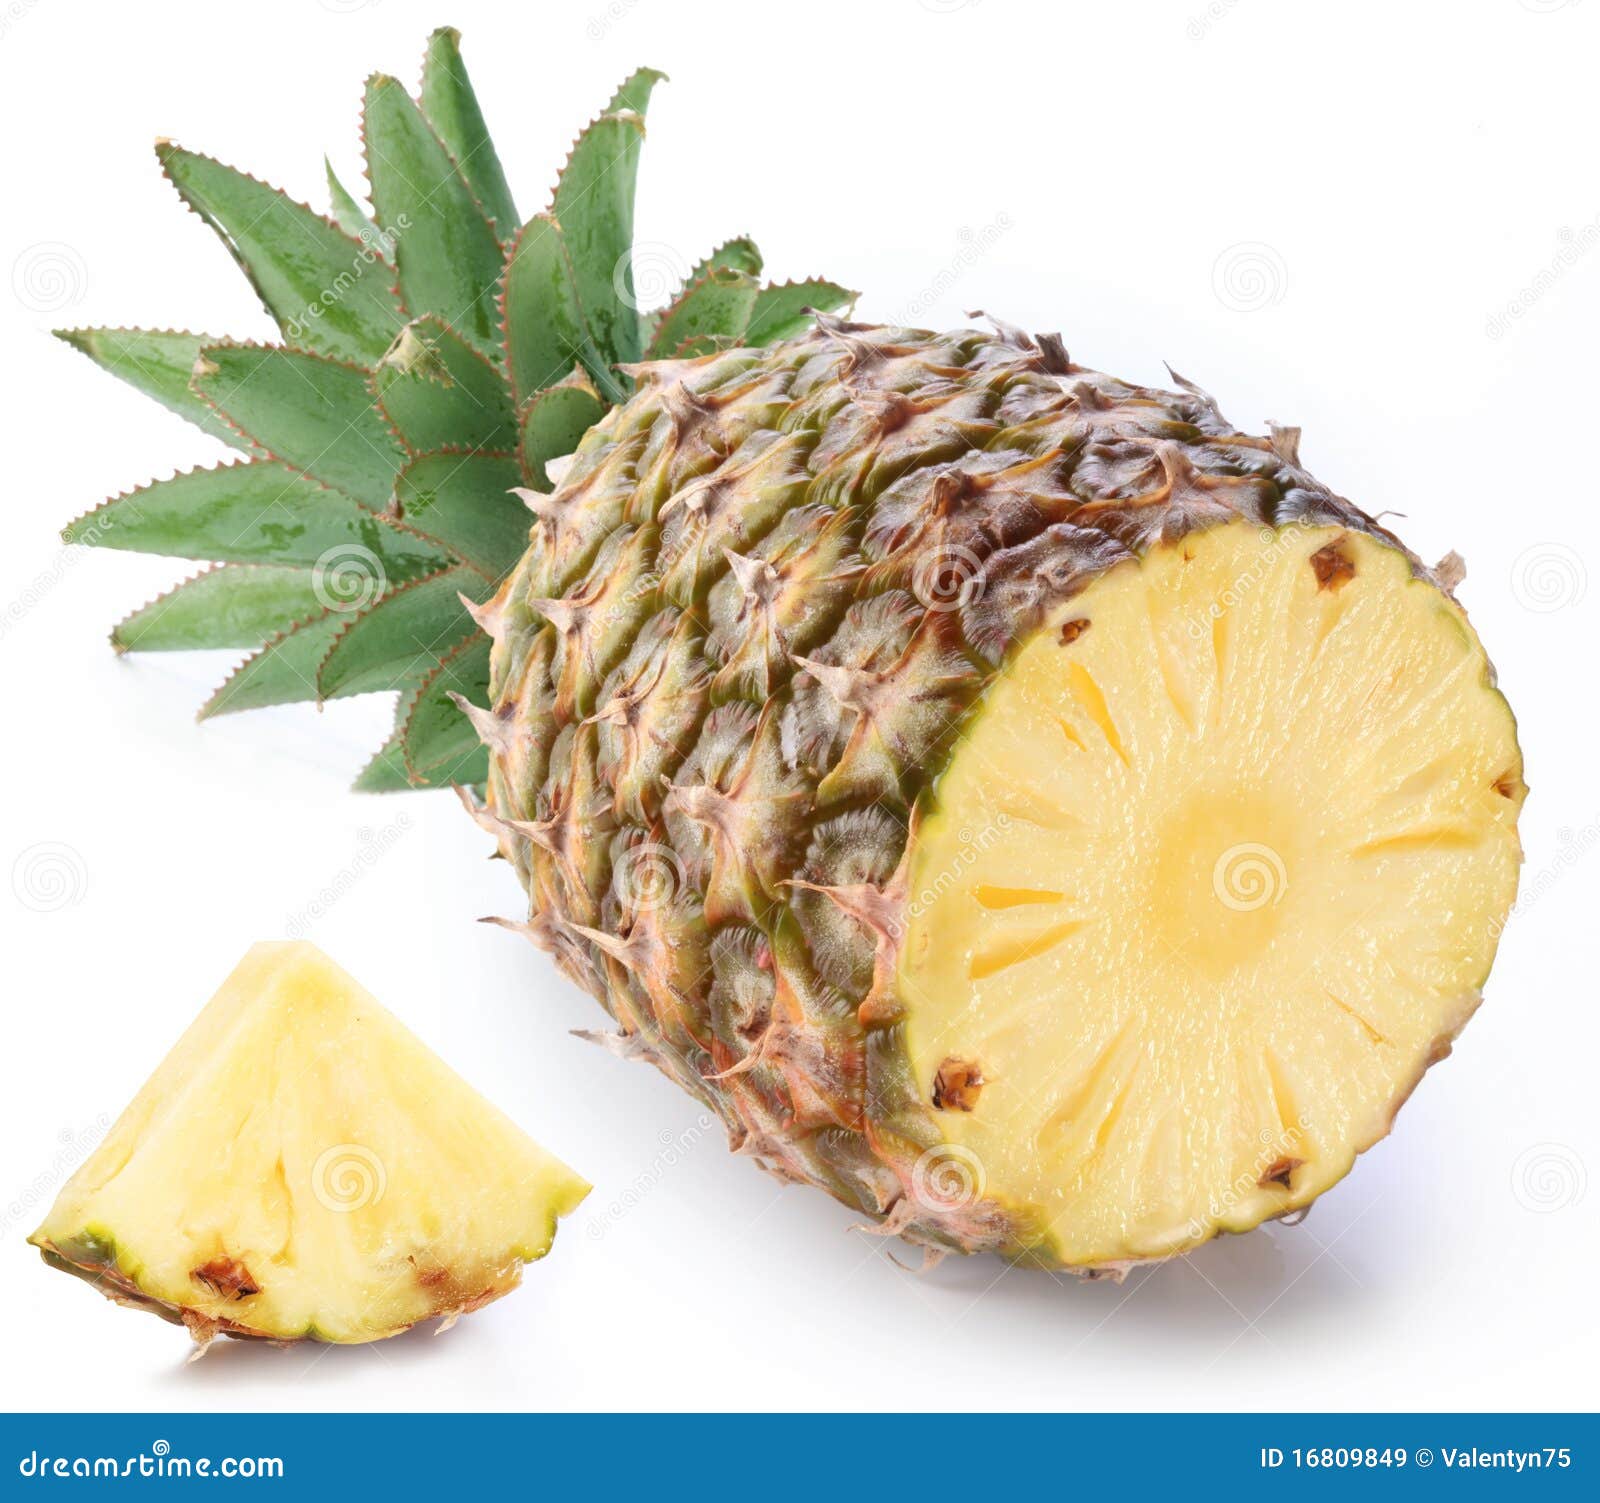 Cut pineapple. stock image. Image of nobody, natural - 16809849